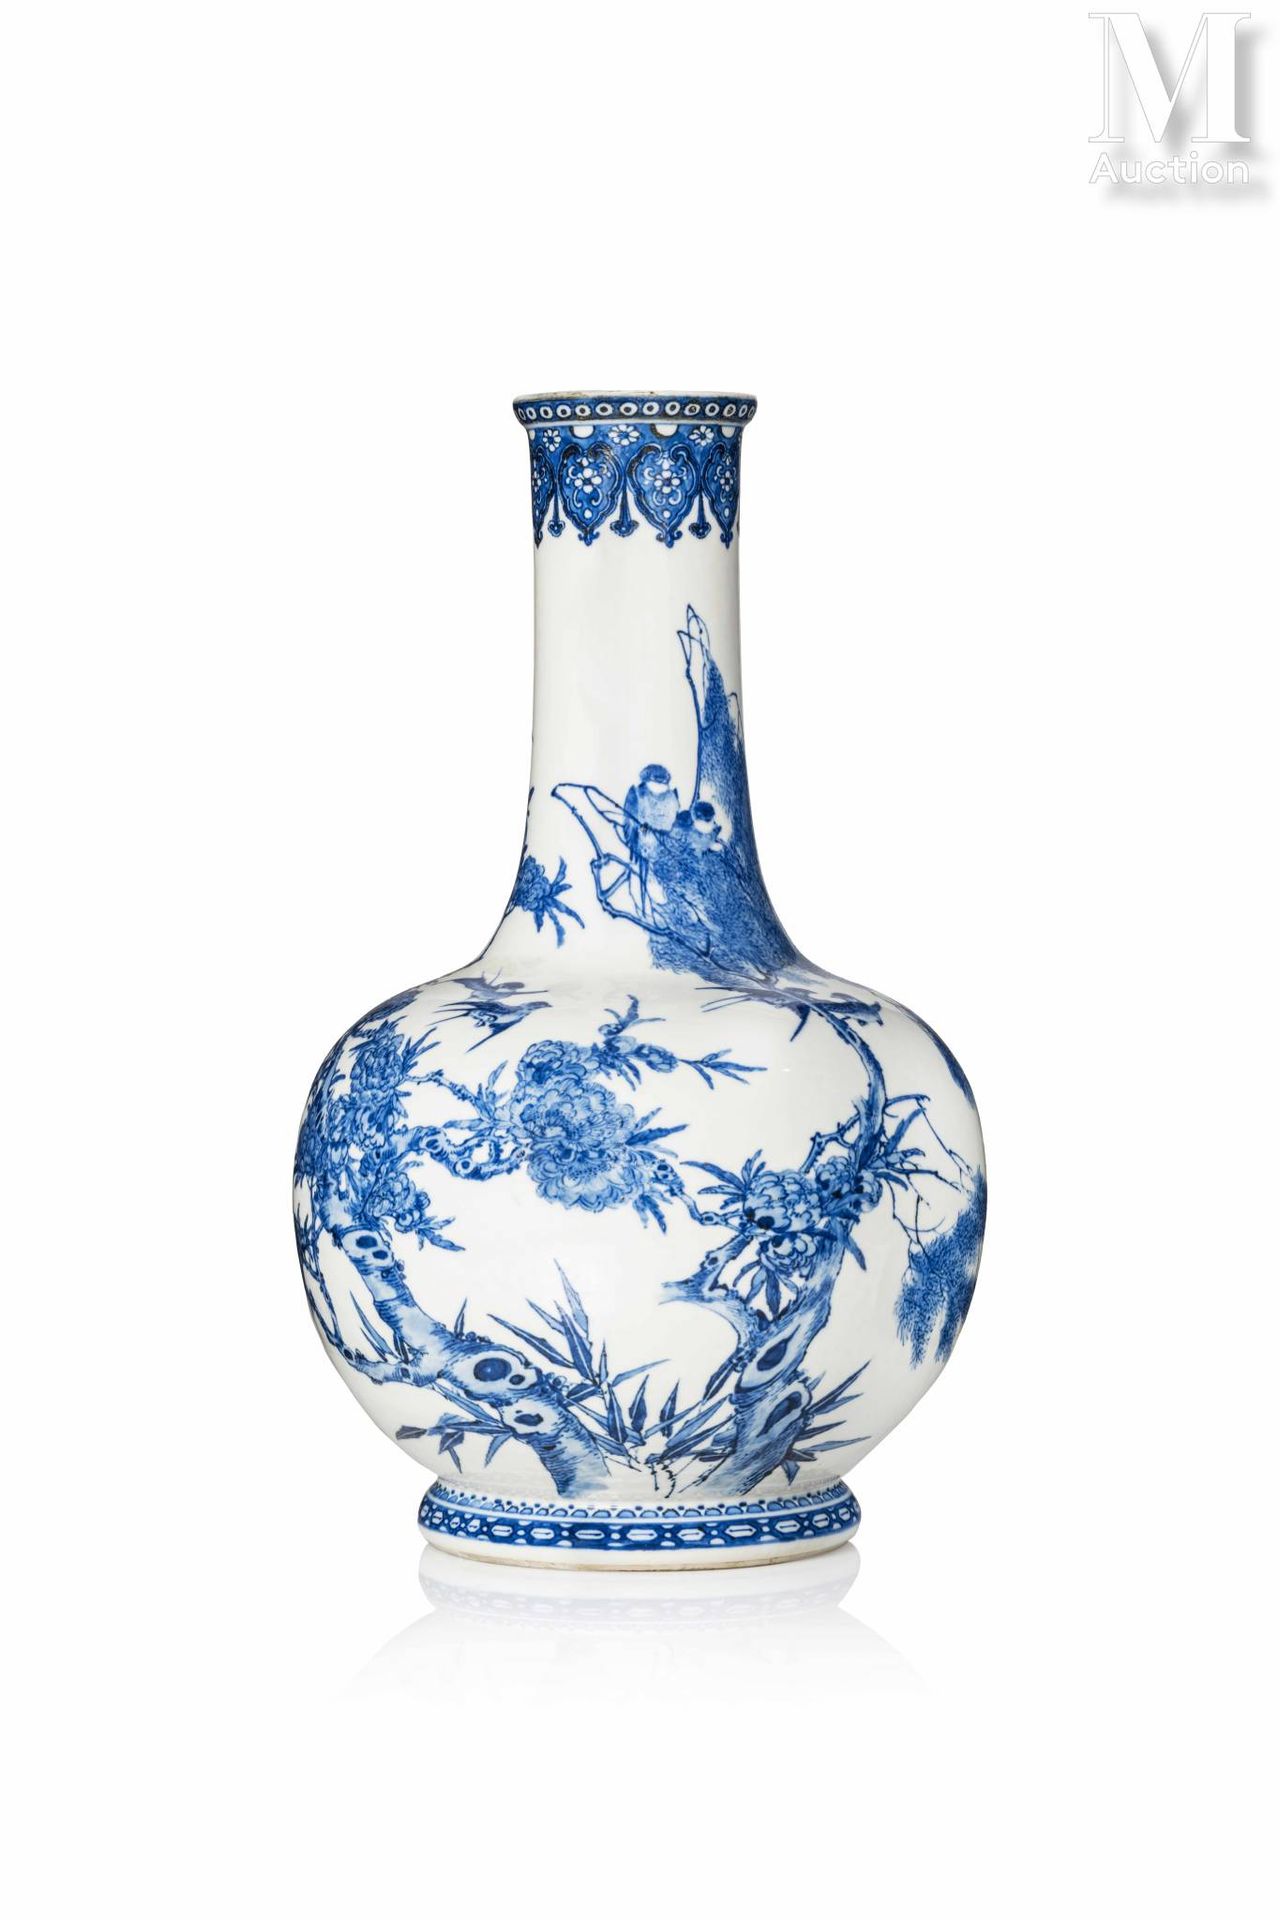 CHINE, Marque et époque Daoguang, XIXe siècle Vase aus Porzellan

auf einem klei&hellip;